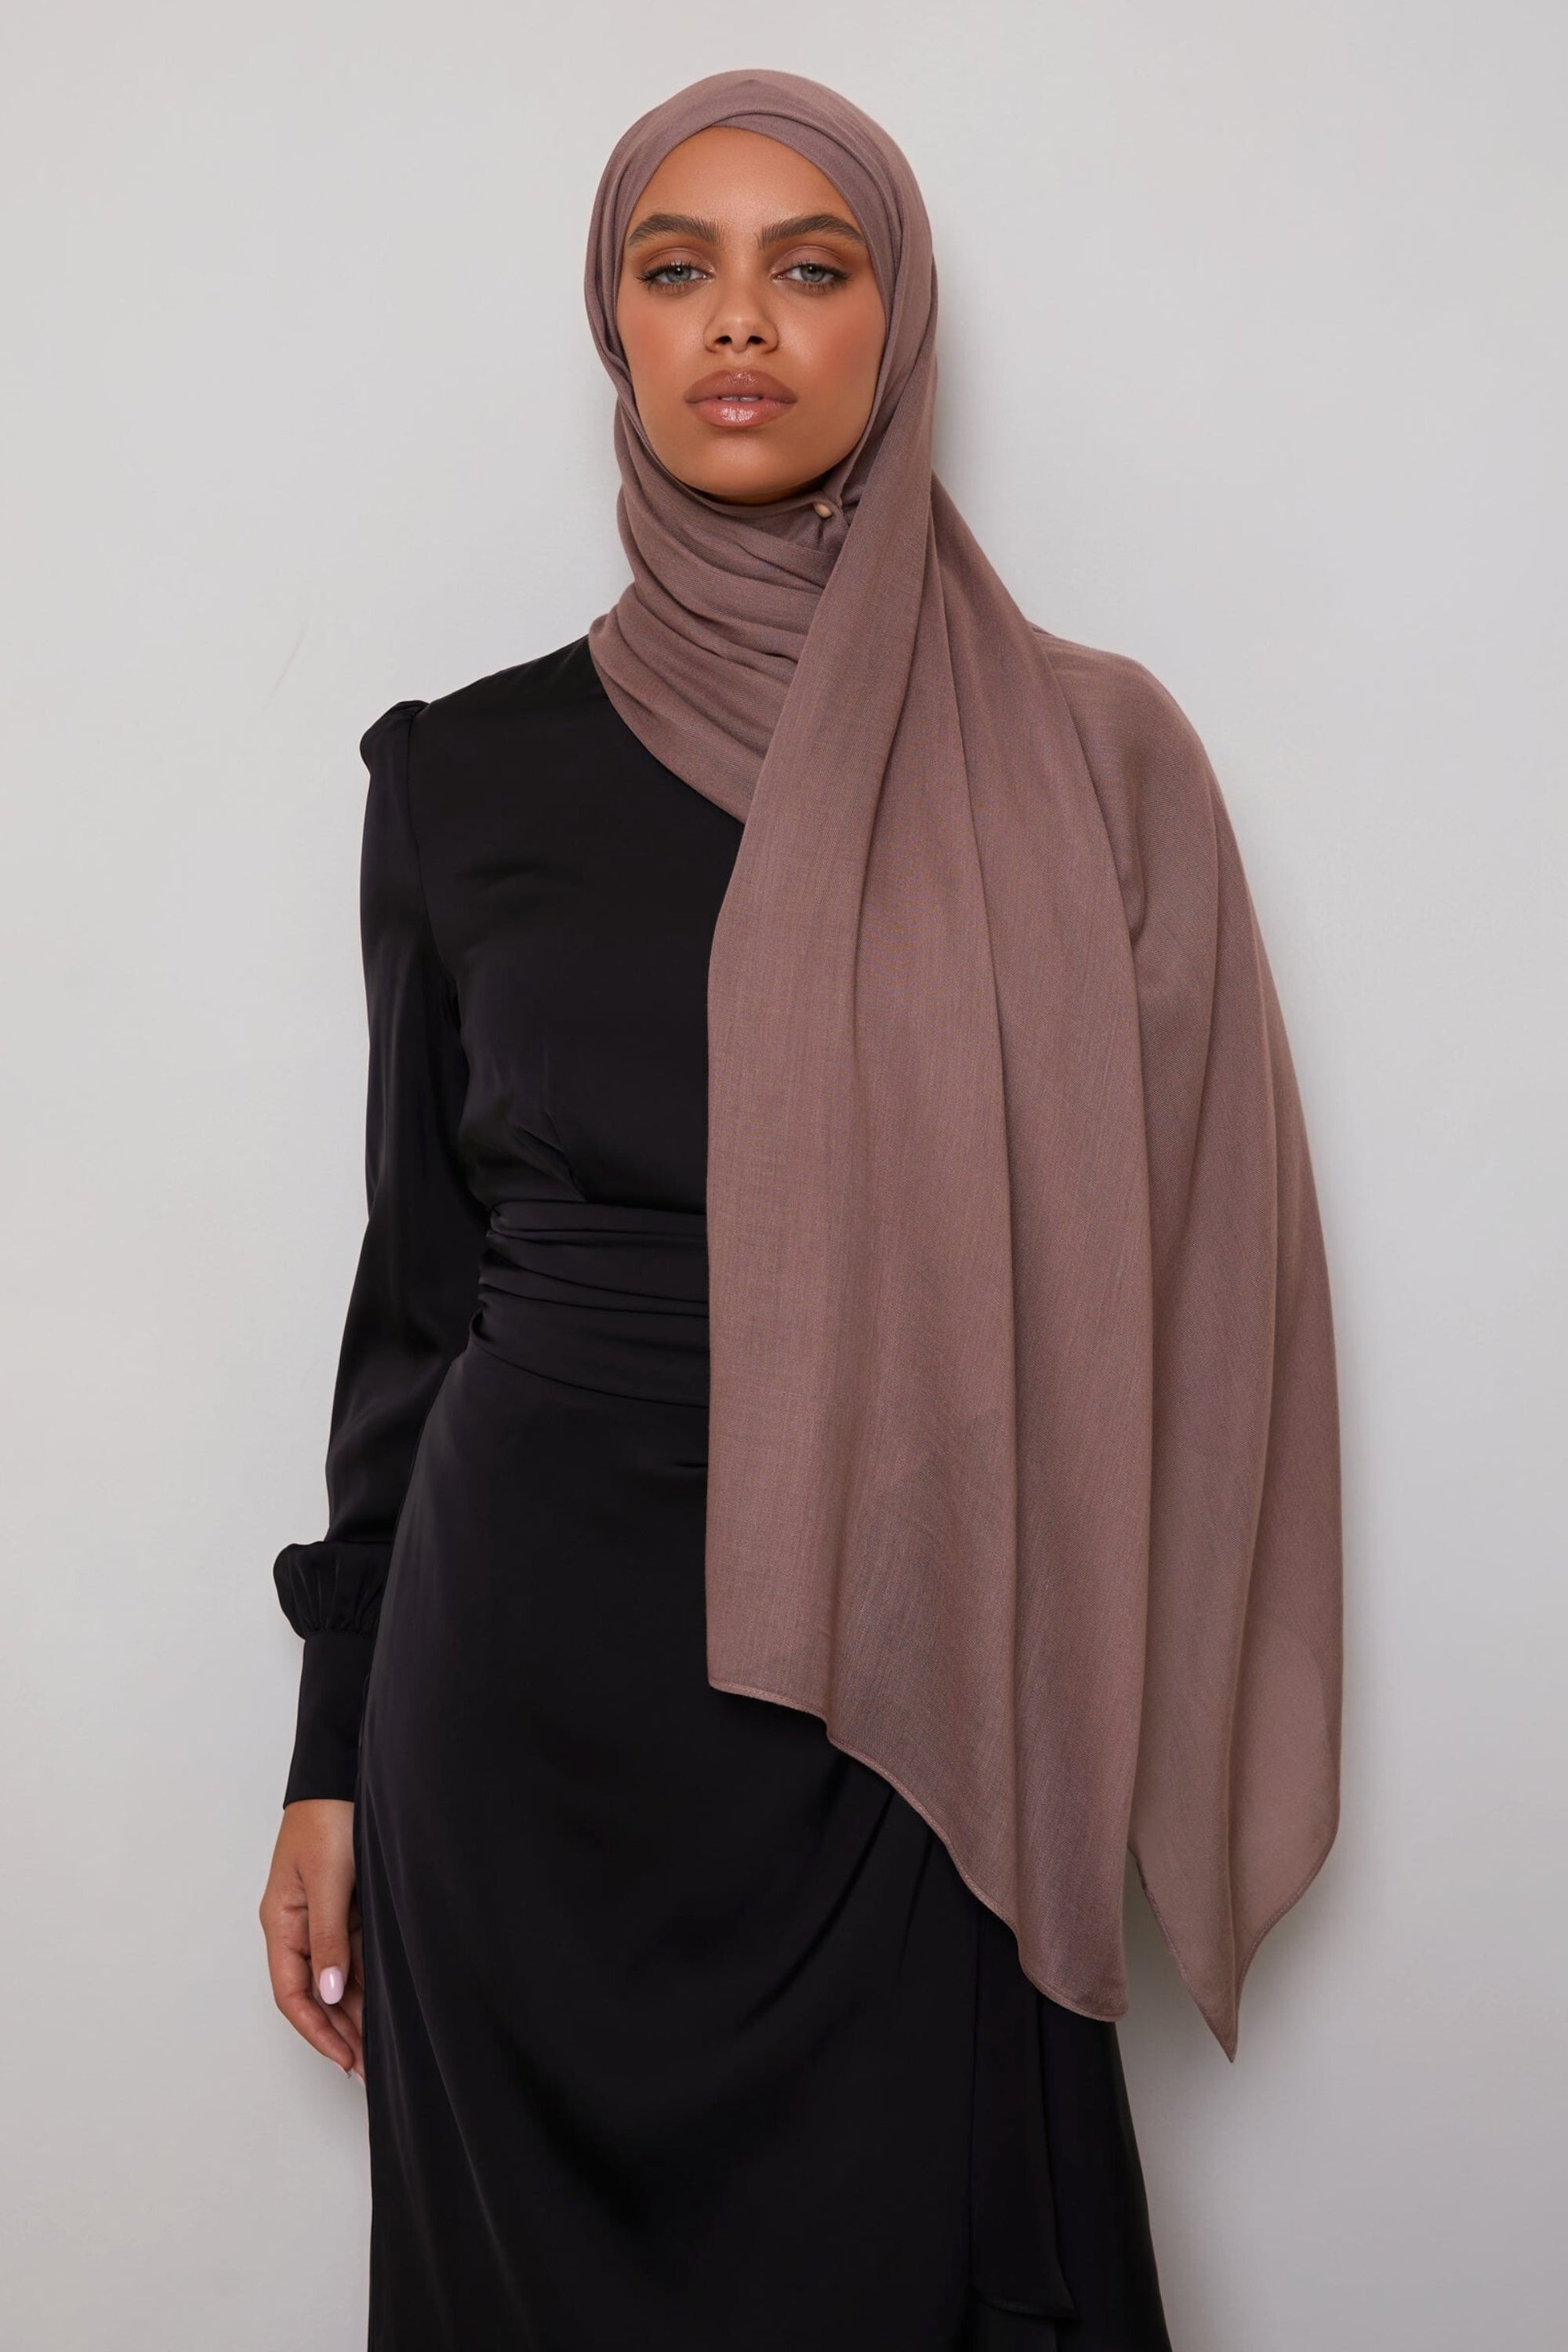 Modal Hijab - Dark Mauve epschoolboard 